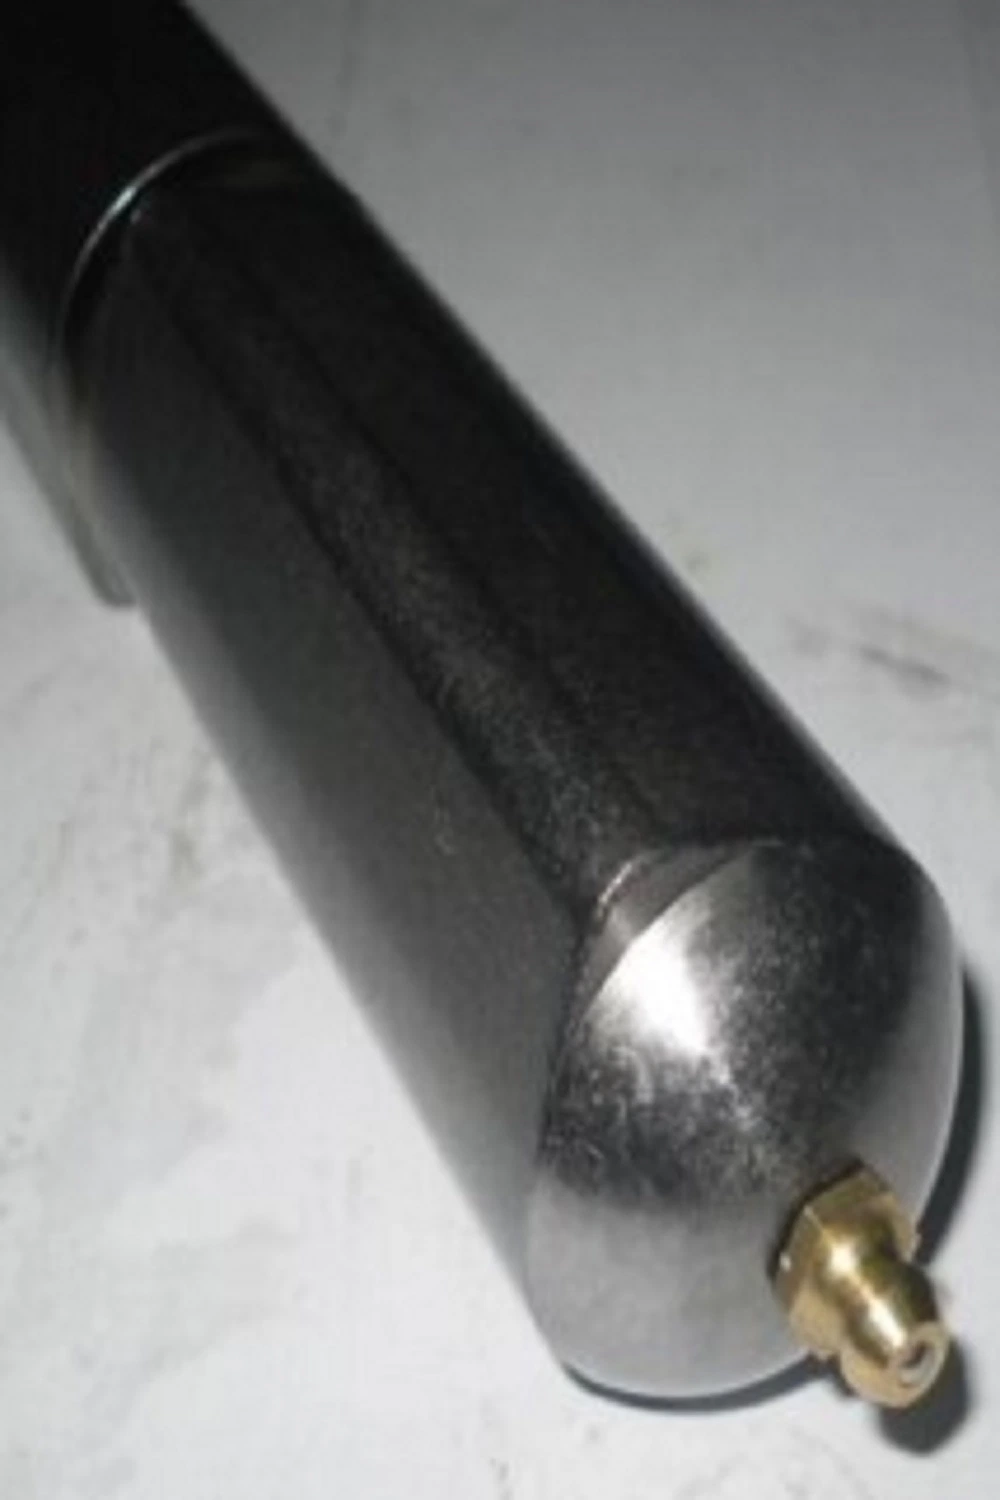 Yh1147 Straight Door Shaft Circular Droplet Shaped Russian Welded Hinge Adjustable Partition 3D Hinge